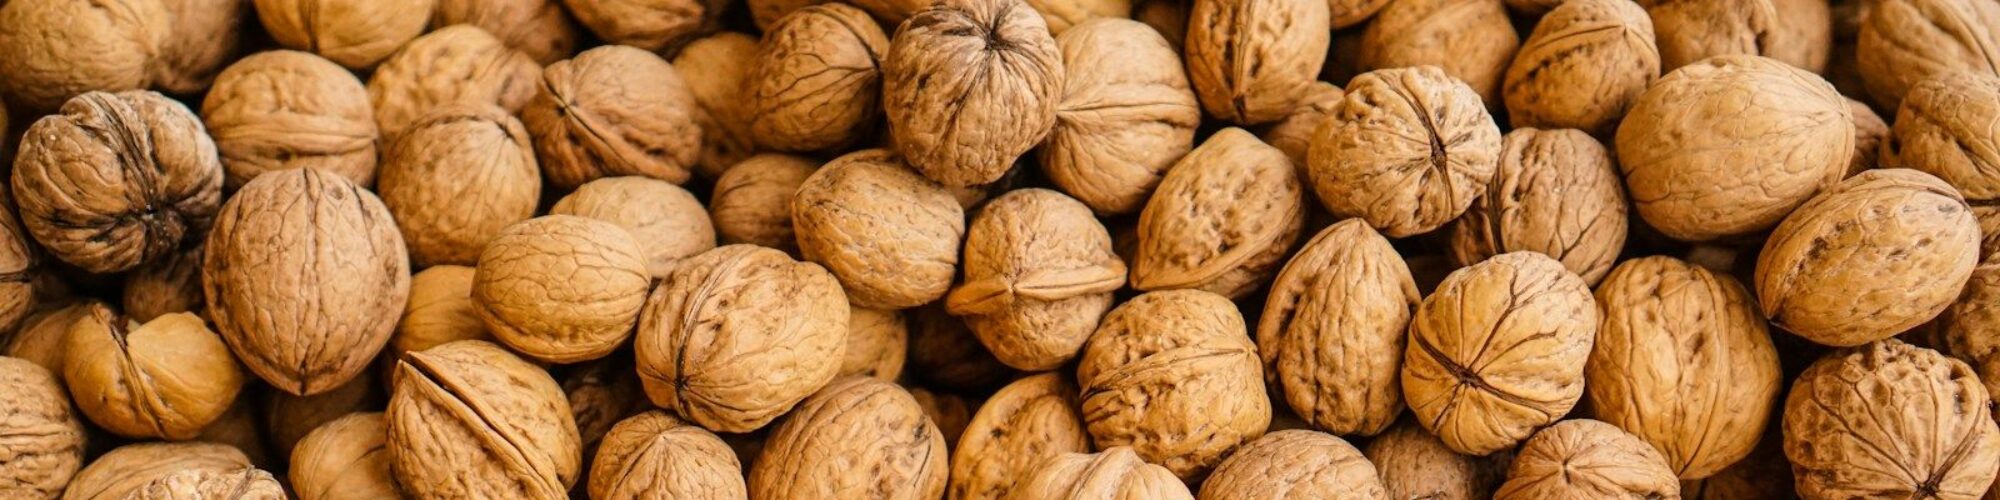 closeup photography of walnuts